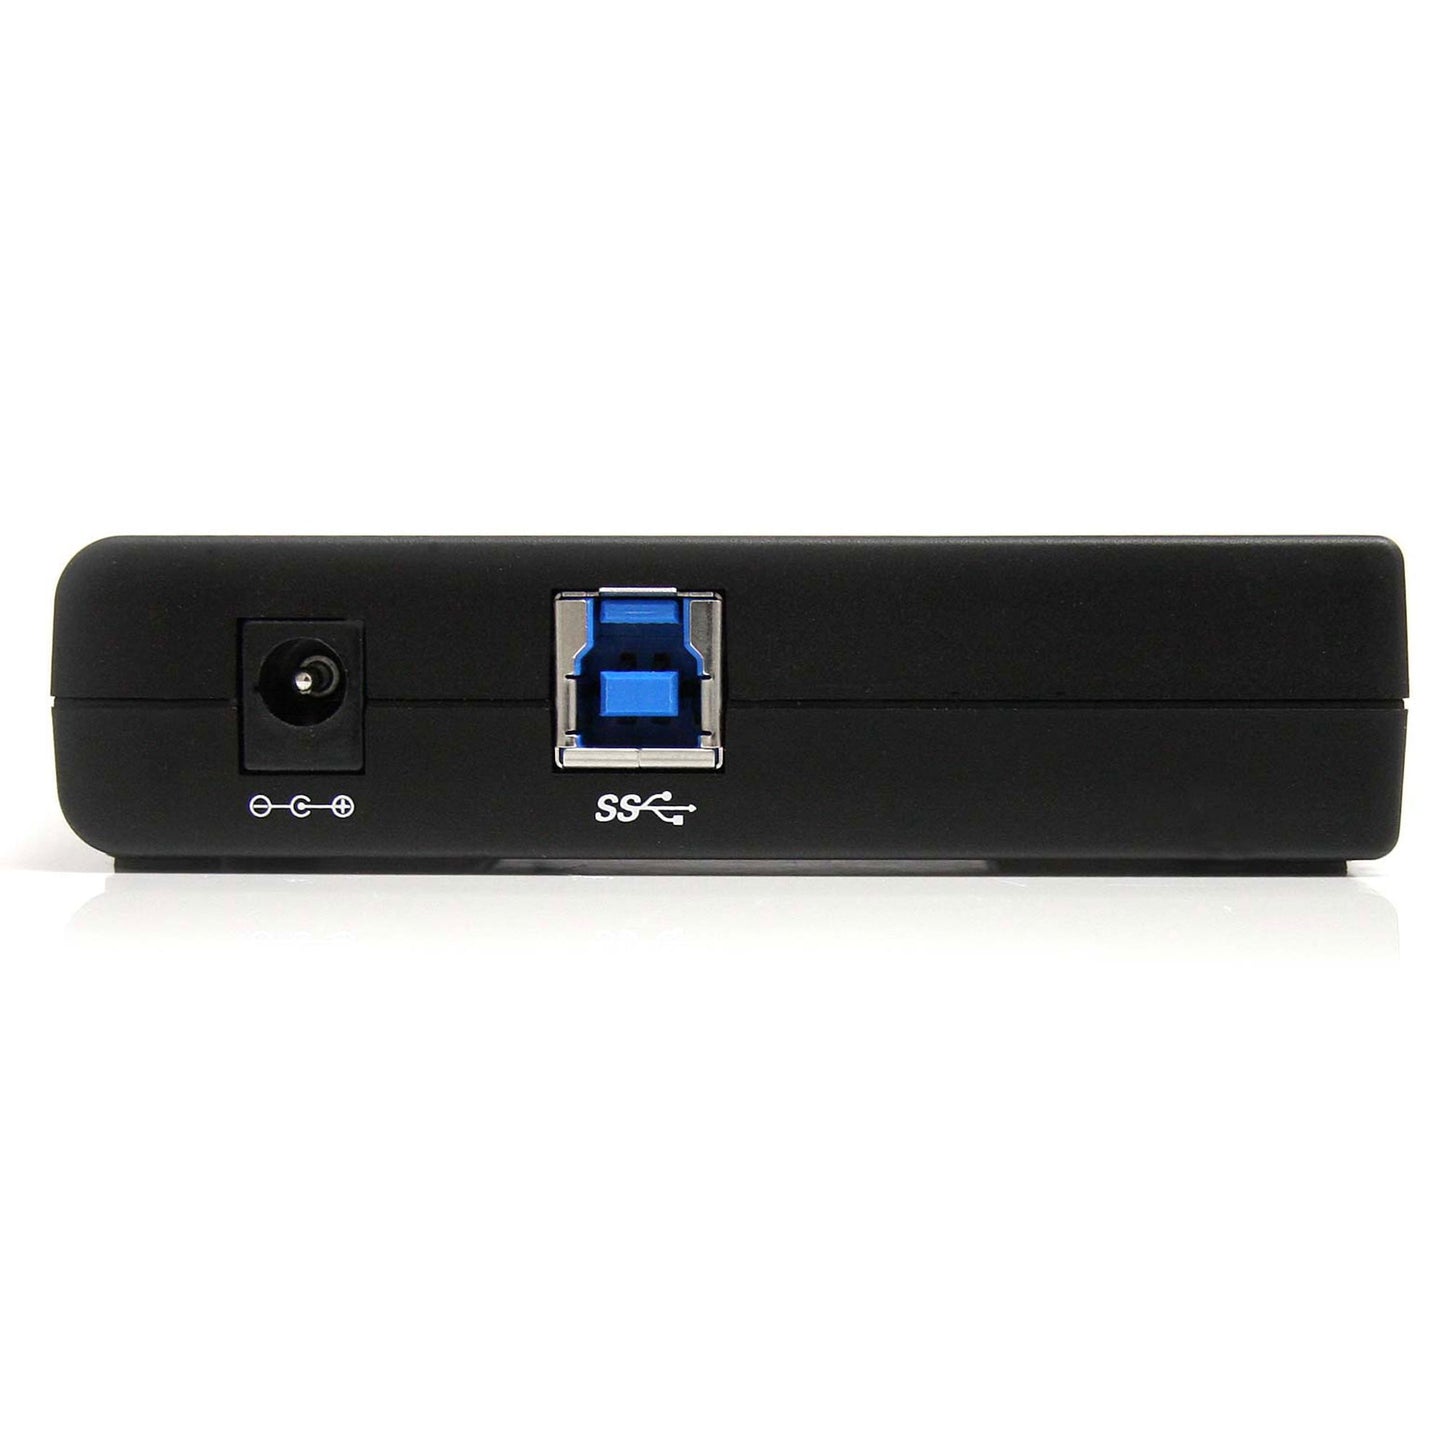 StarTech.com 4 Port Black SuperSpeed USB 3.0 Hub - 5Gbps-2